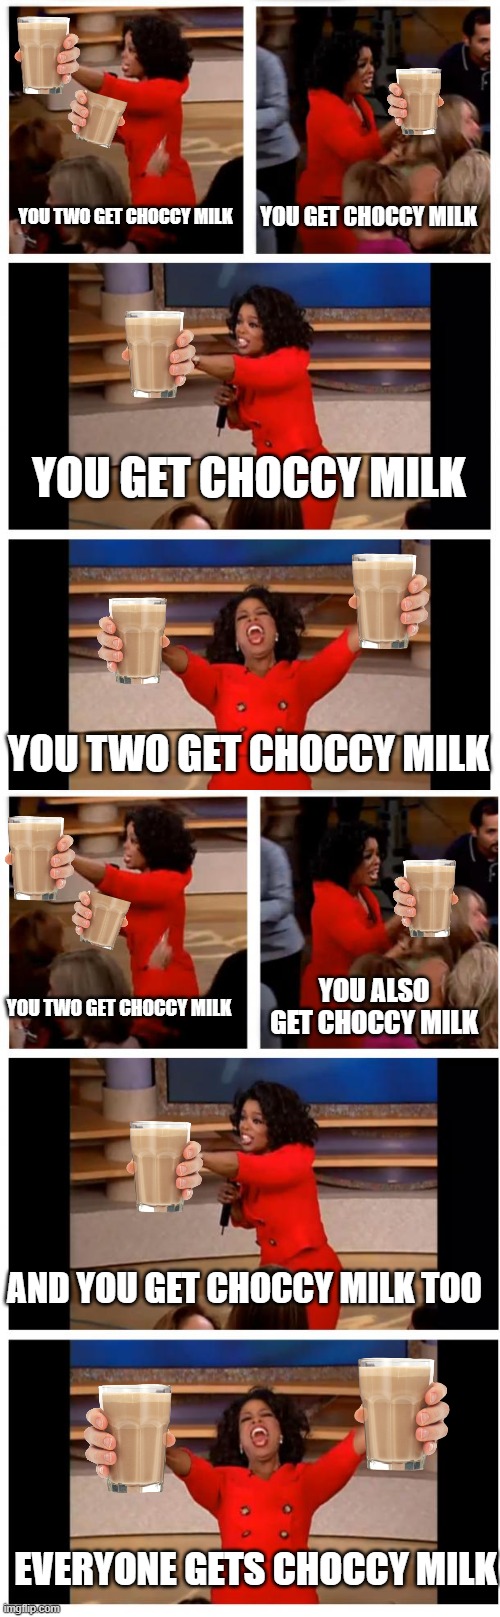 so much choccy milk!! an imgfliper's dream... | YOU GET CHOCCY MILK; YOU TWO GET CHOCCY MILK; YOU GET CHOCCY MILK; YOU TWO GET CHOCCY MILK; YOU ALSO GET CHOCCY MILK; YOU TWO GET CHOCCY MILK; AND YOU GET CHOCCY MILK TOO; EVERYONE GETS CHOCCY MILK | image tagged in memes,oprah you get a car everybody gets a car,choccy milk | made w/ Imgflip meme maker